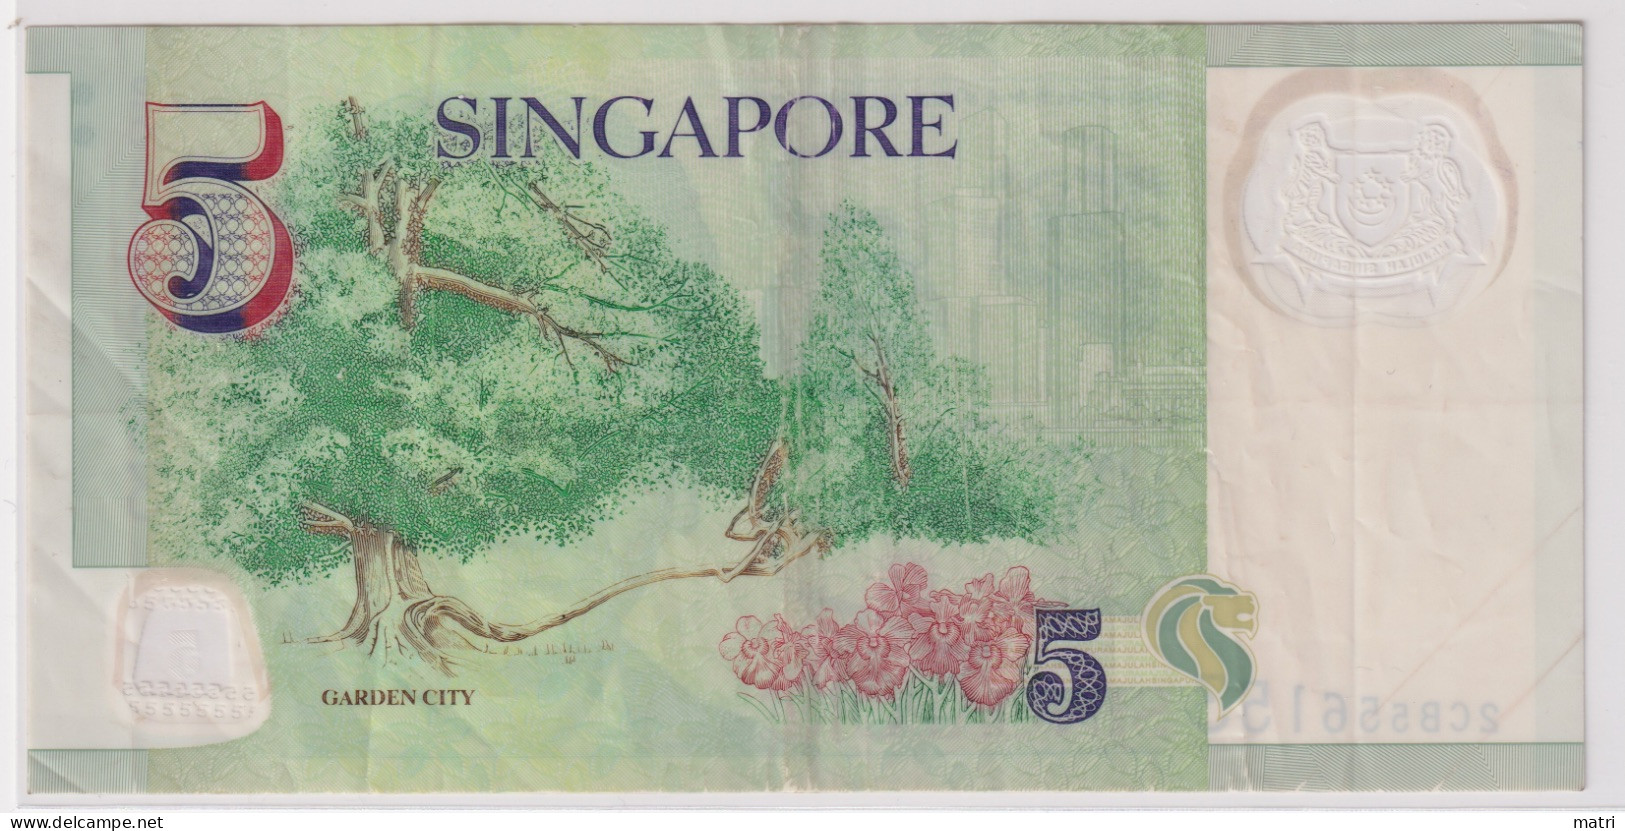 Singapore 5 Dollars - Singapour